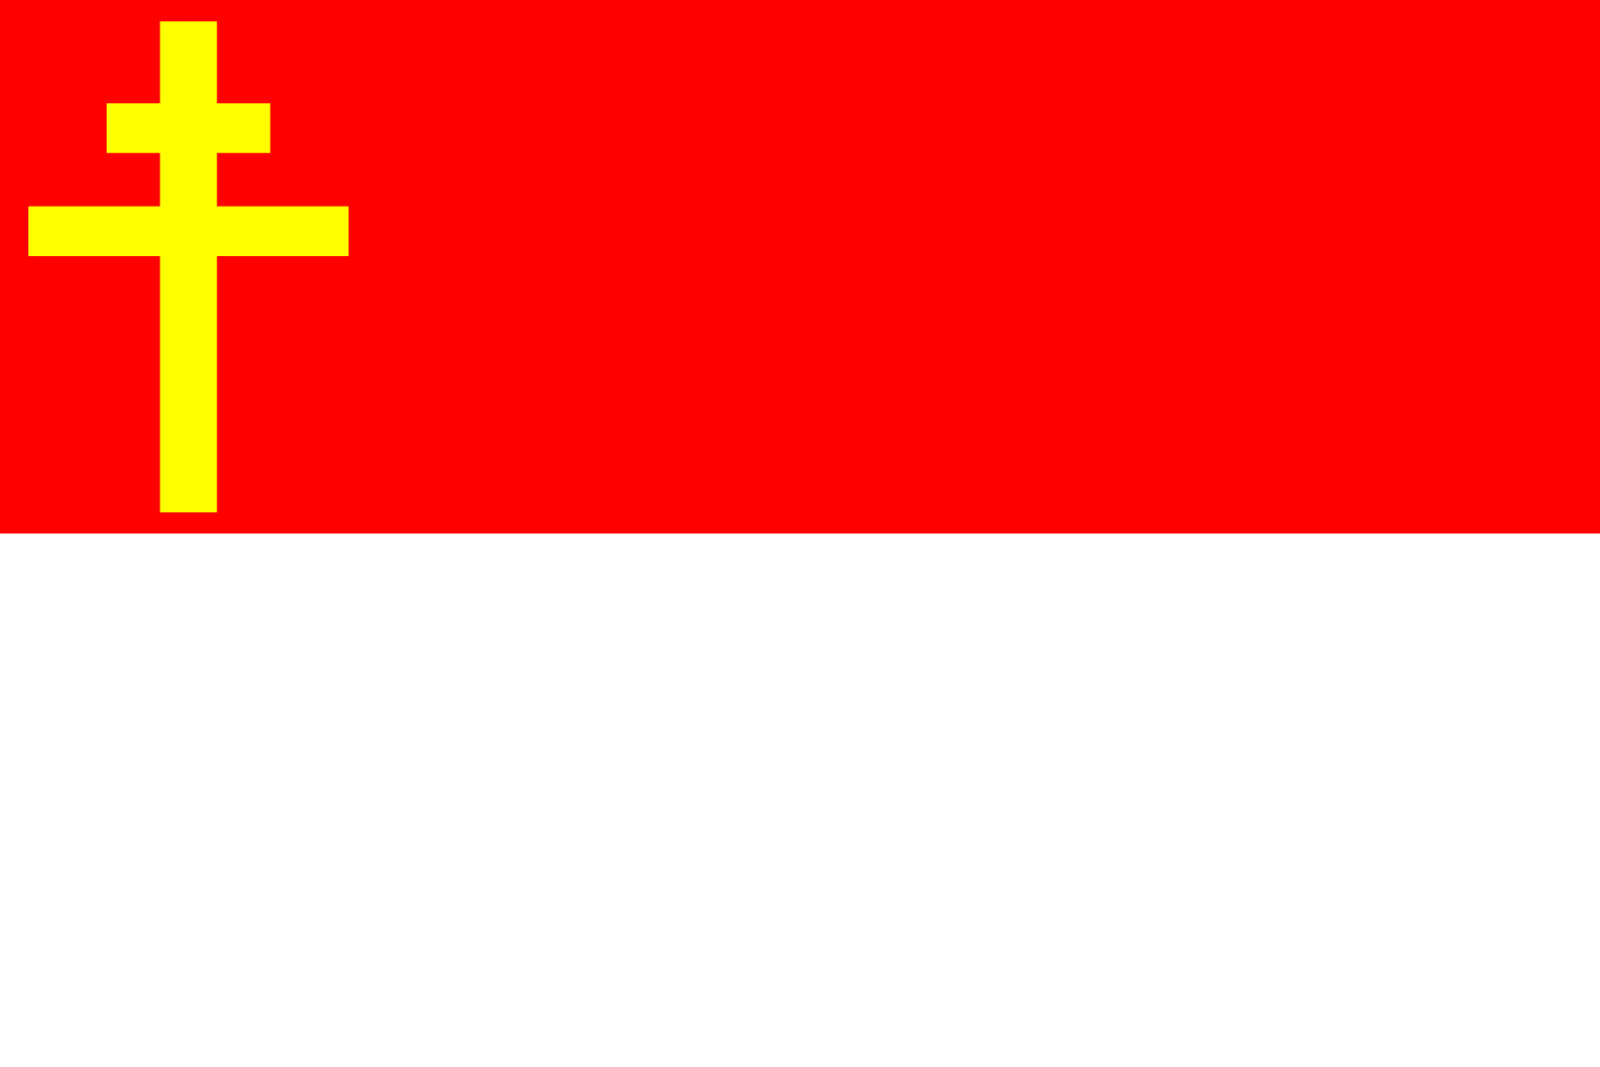 The Alsace-Lorraine Reichsland flag